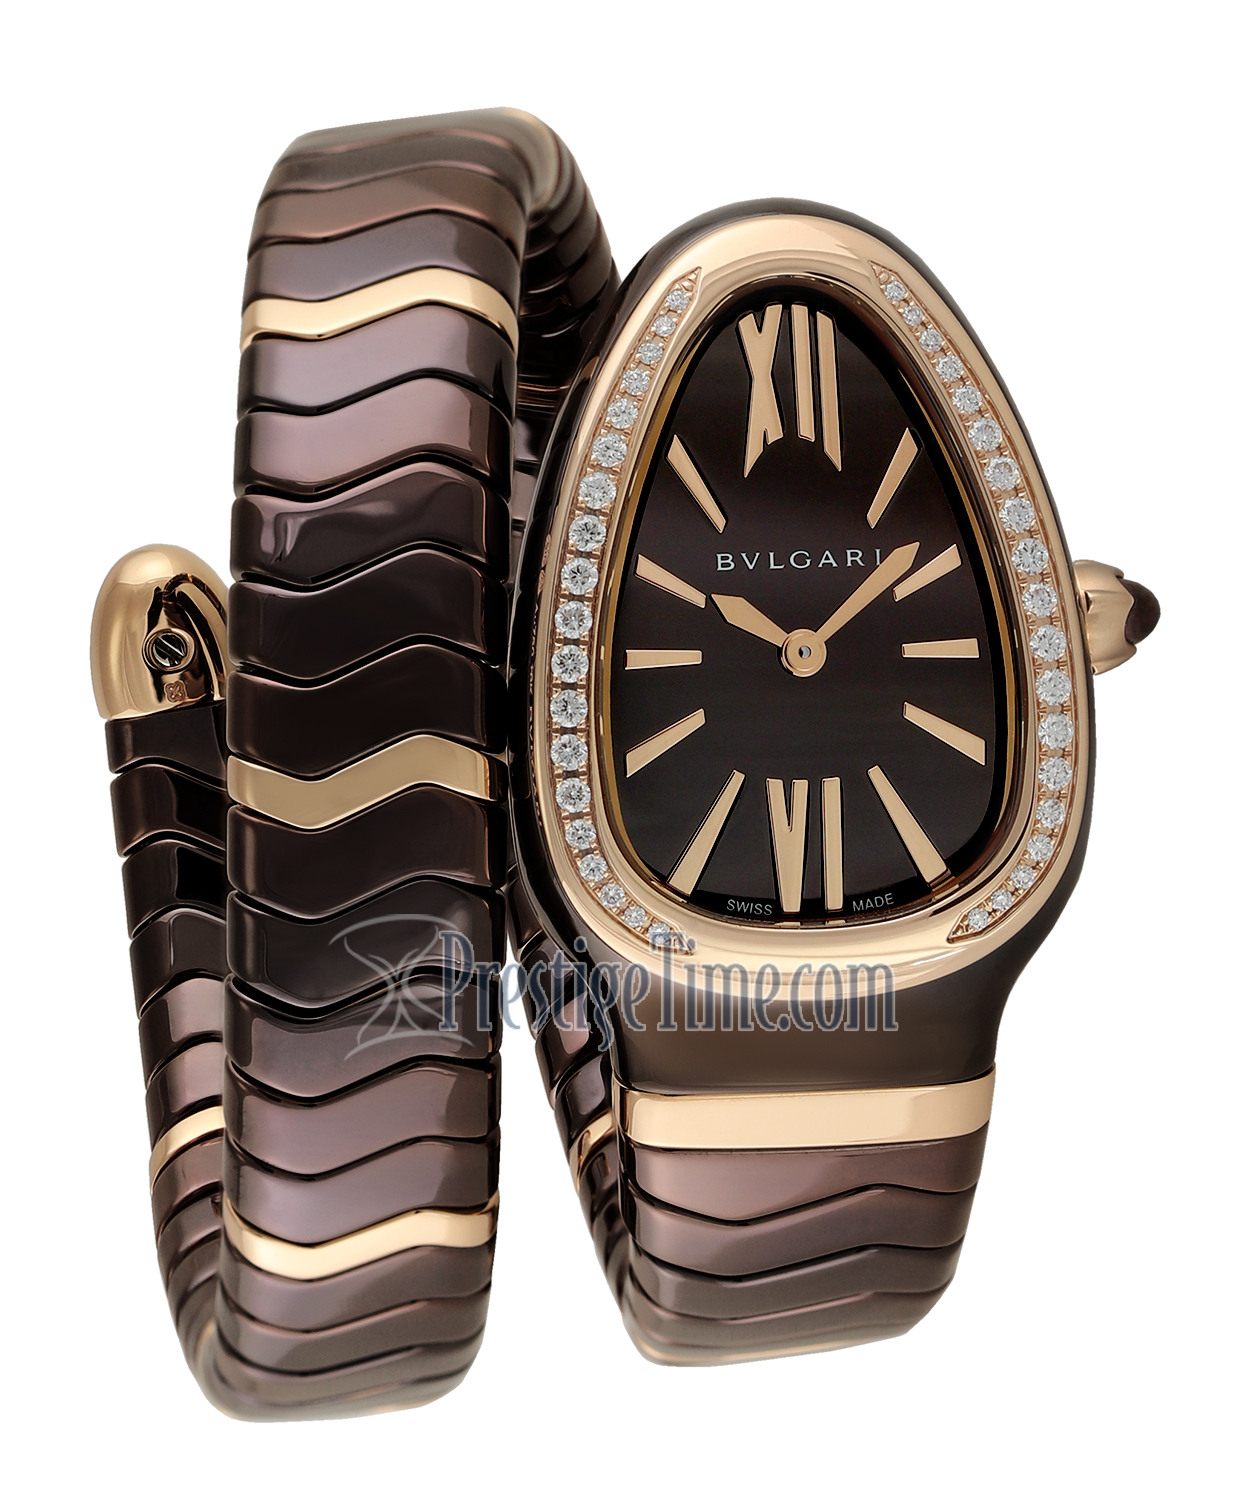 price of bulgari serpenti watch